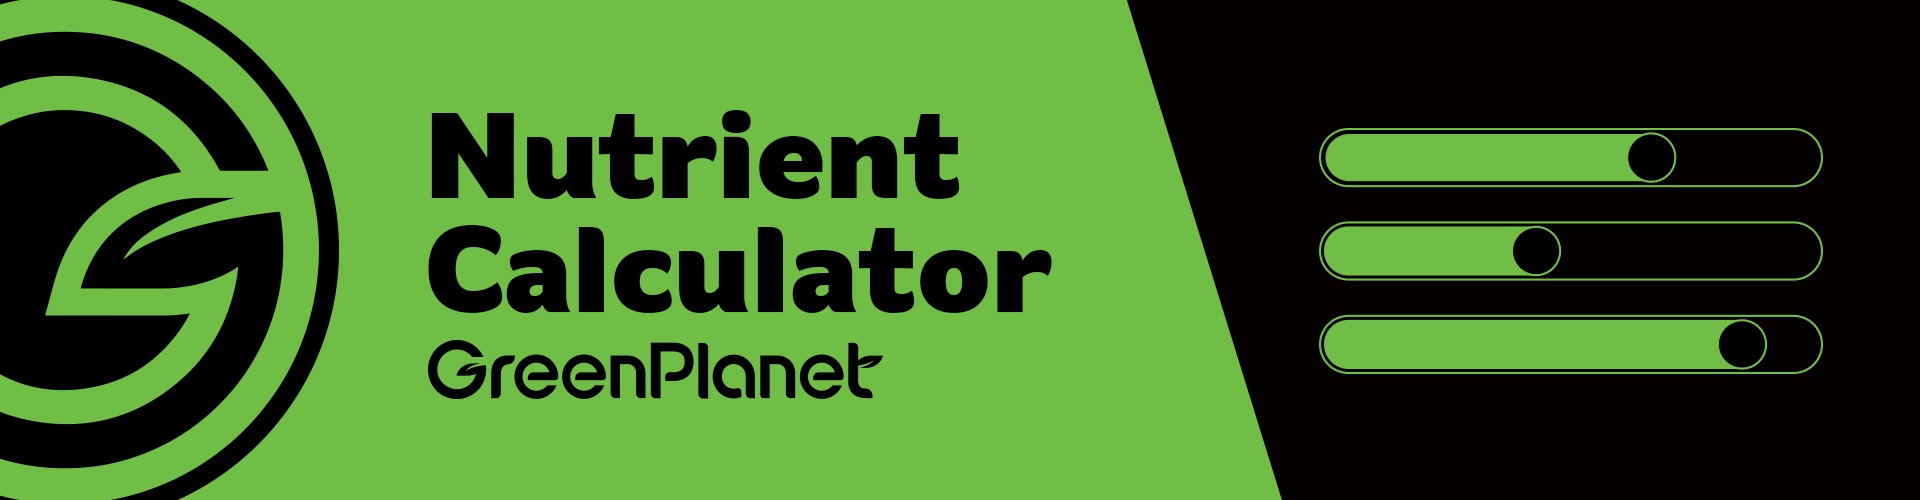 Green Planet Nutrient Calculator